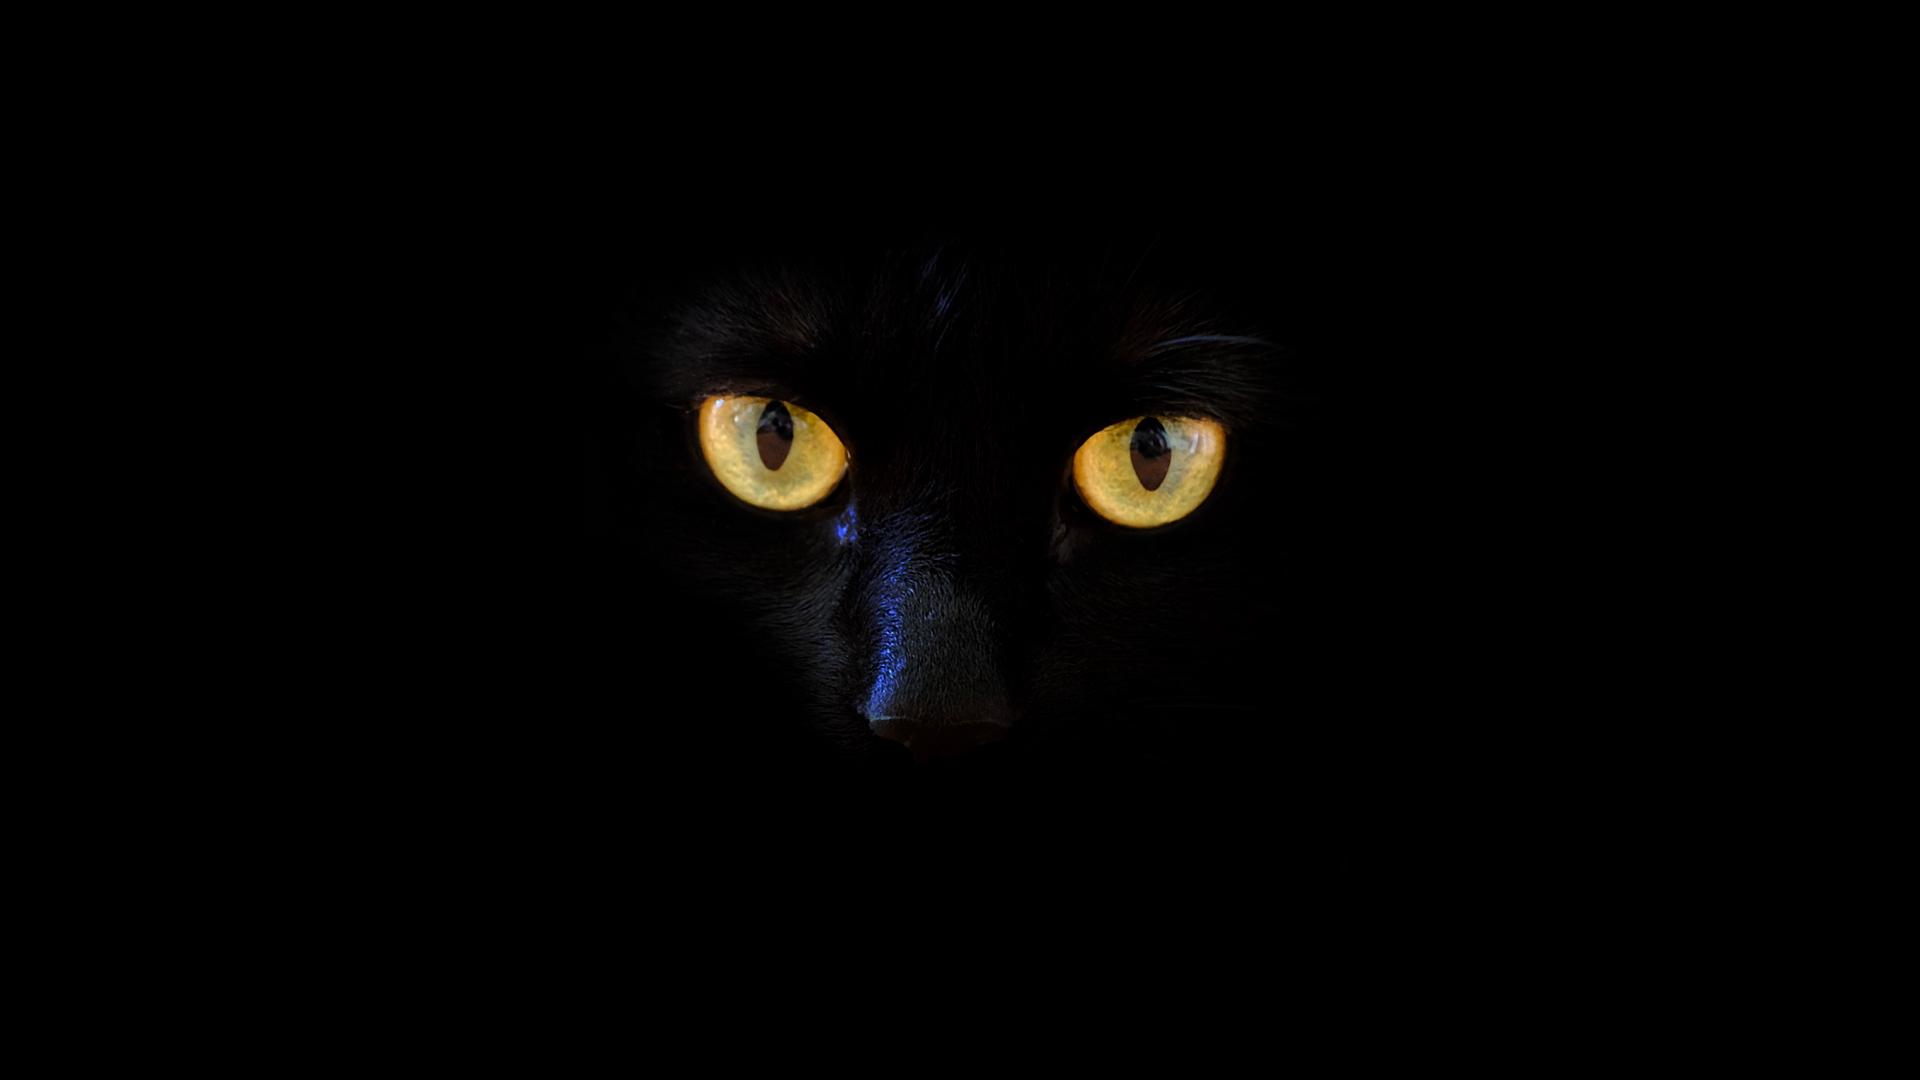 Download wallpaper 1920x1080 cat, black cat, eyes, dark full HD